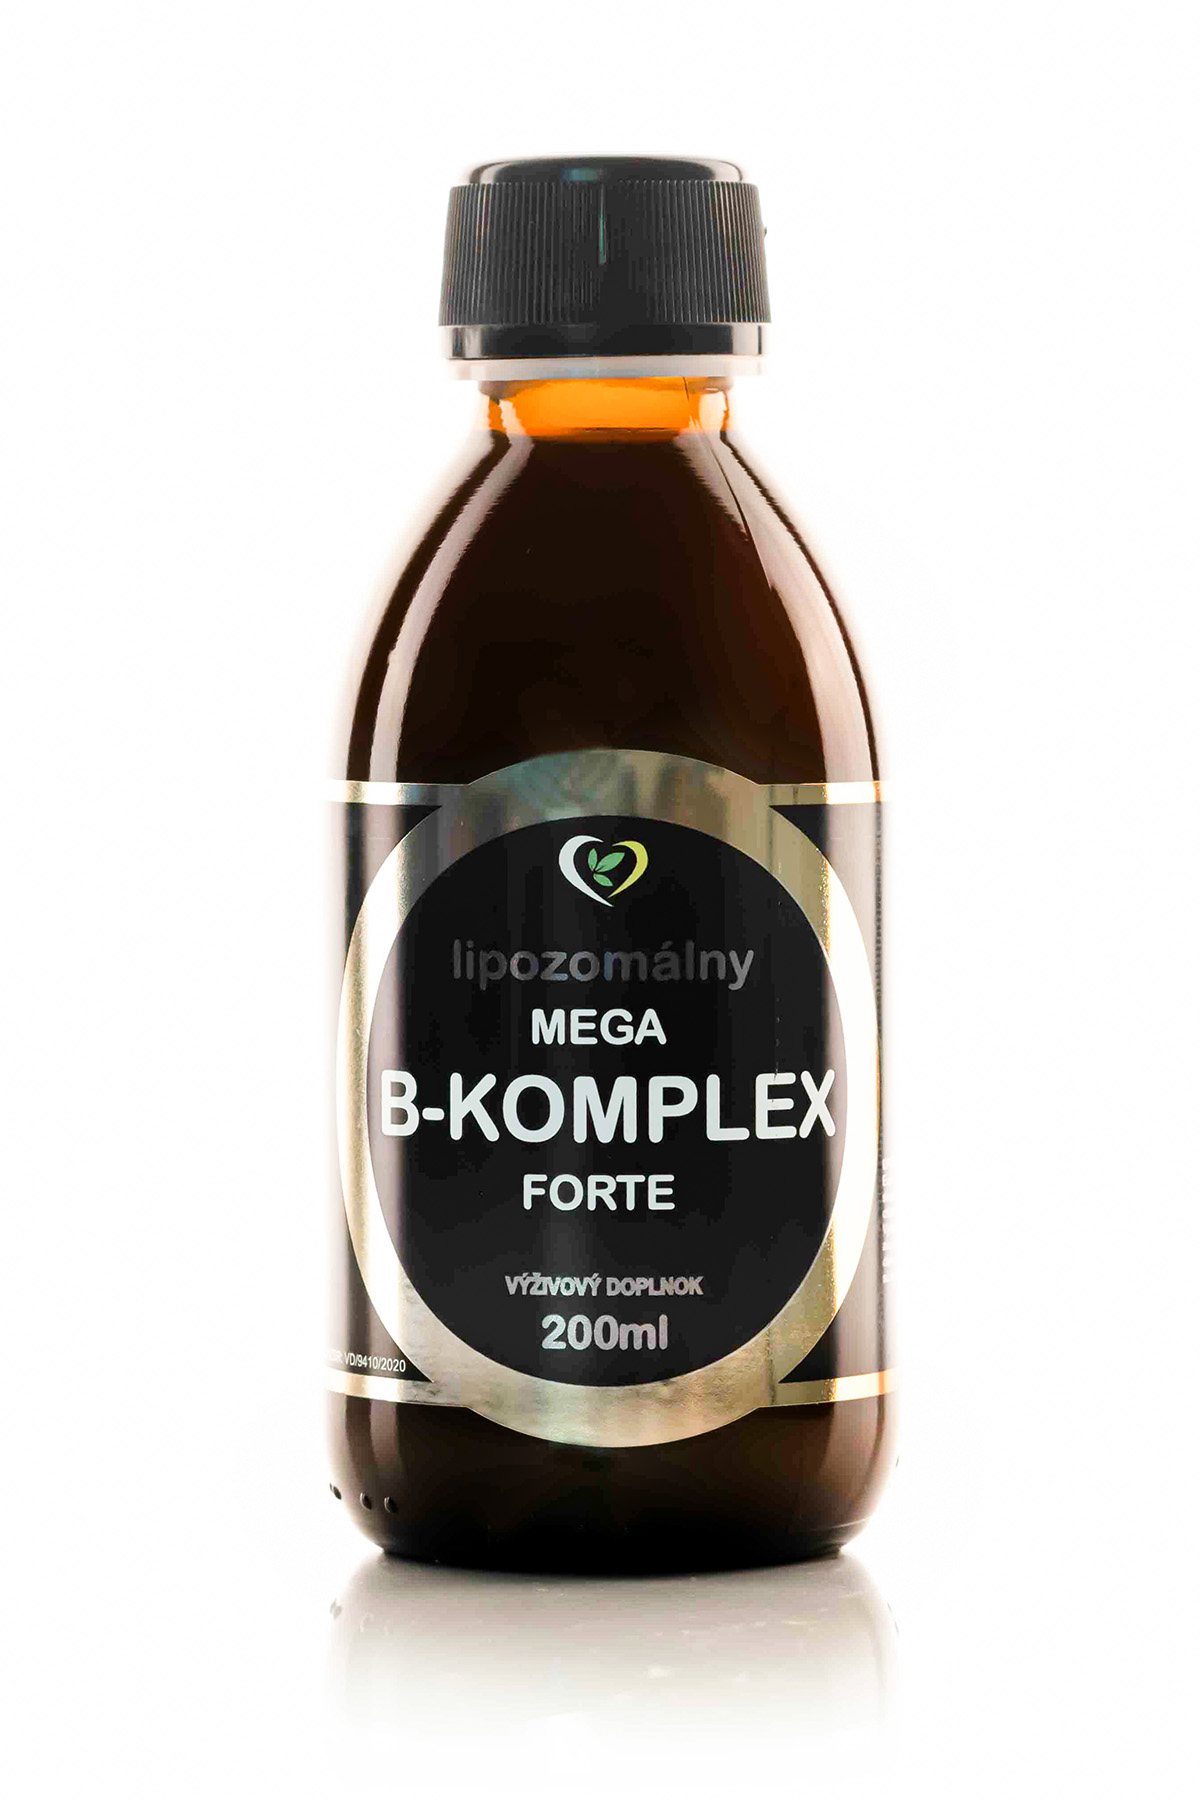 Lipozomálny vitamín mega B-komplex forte